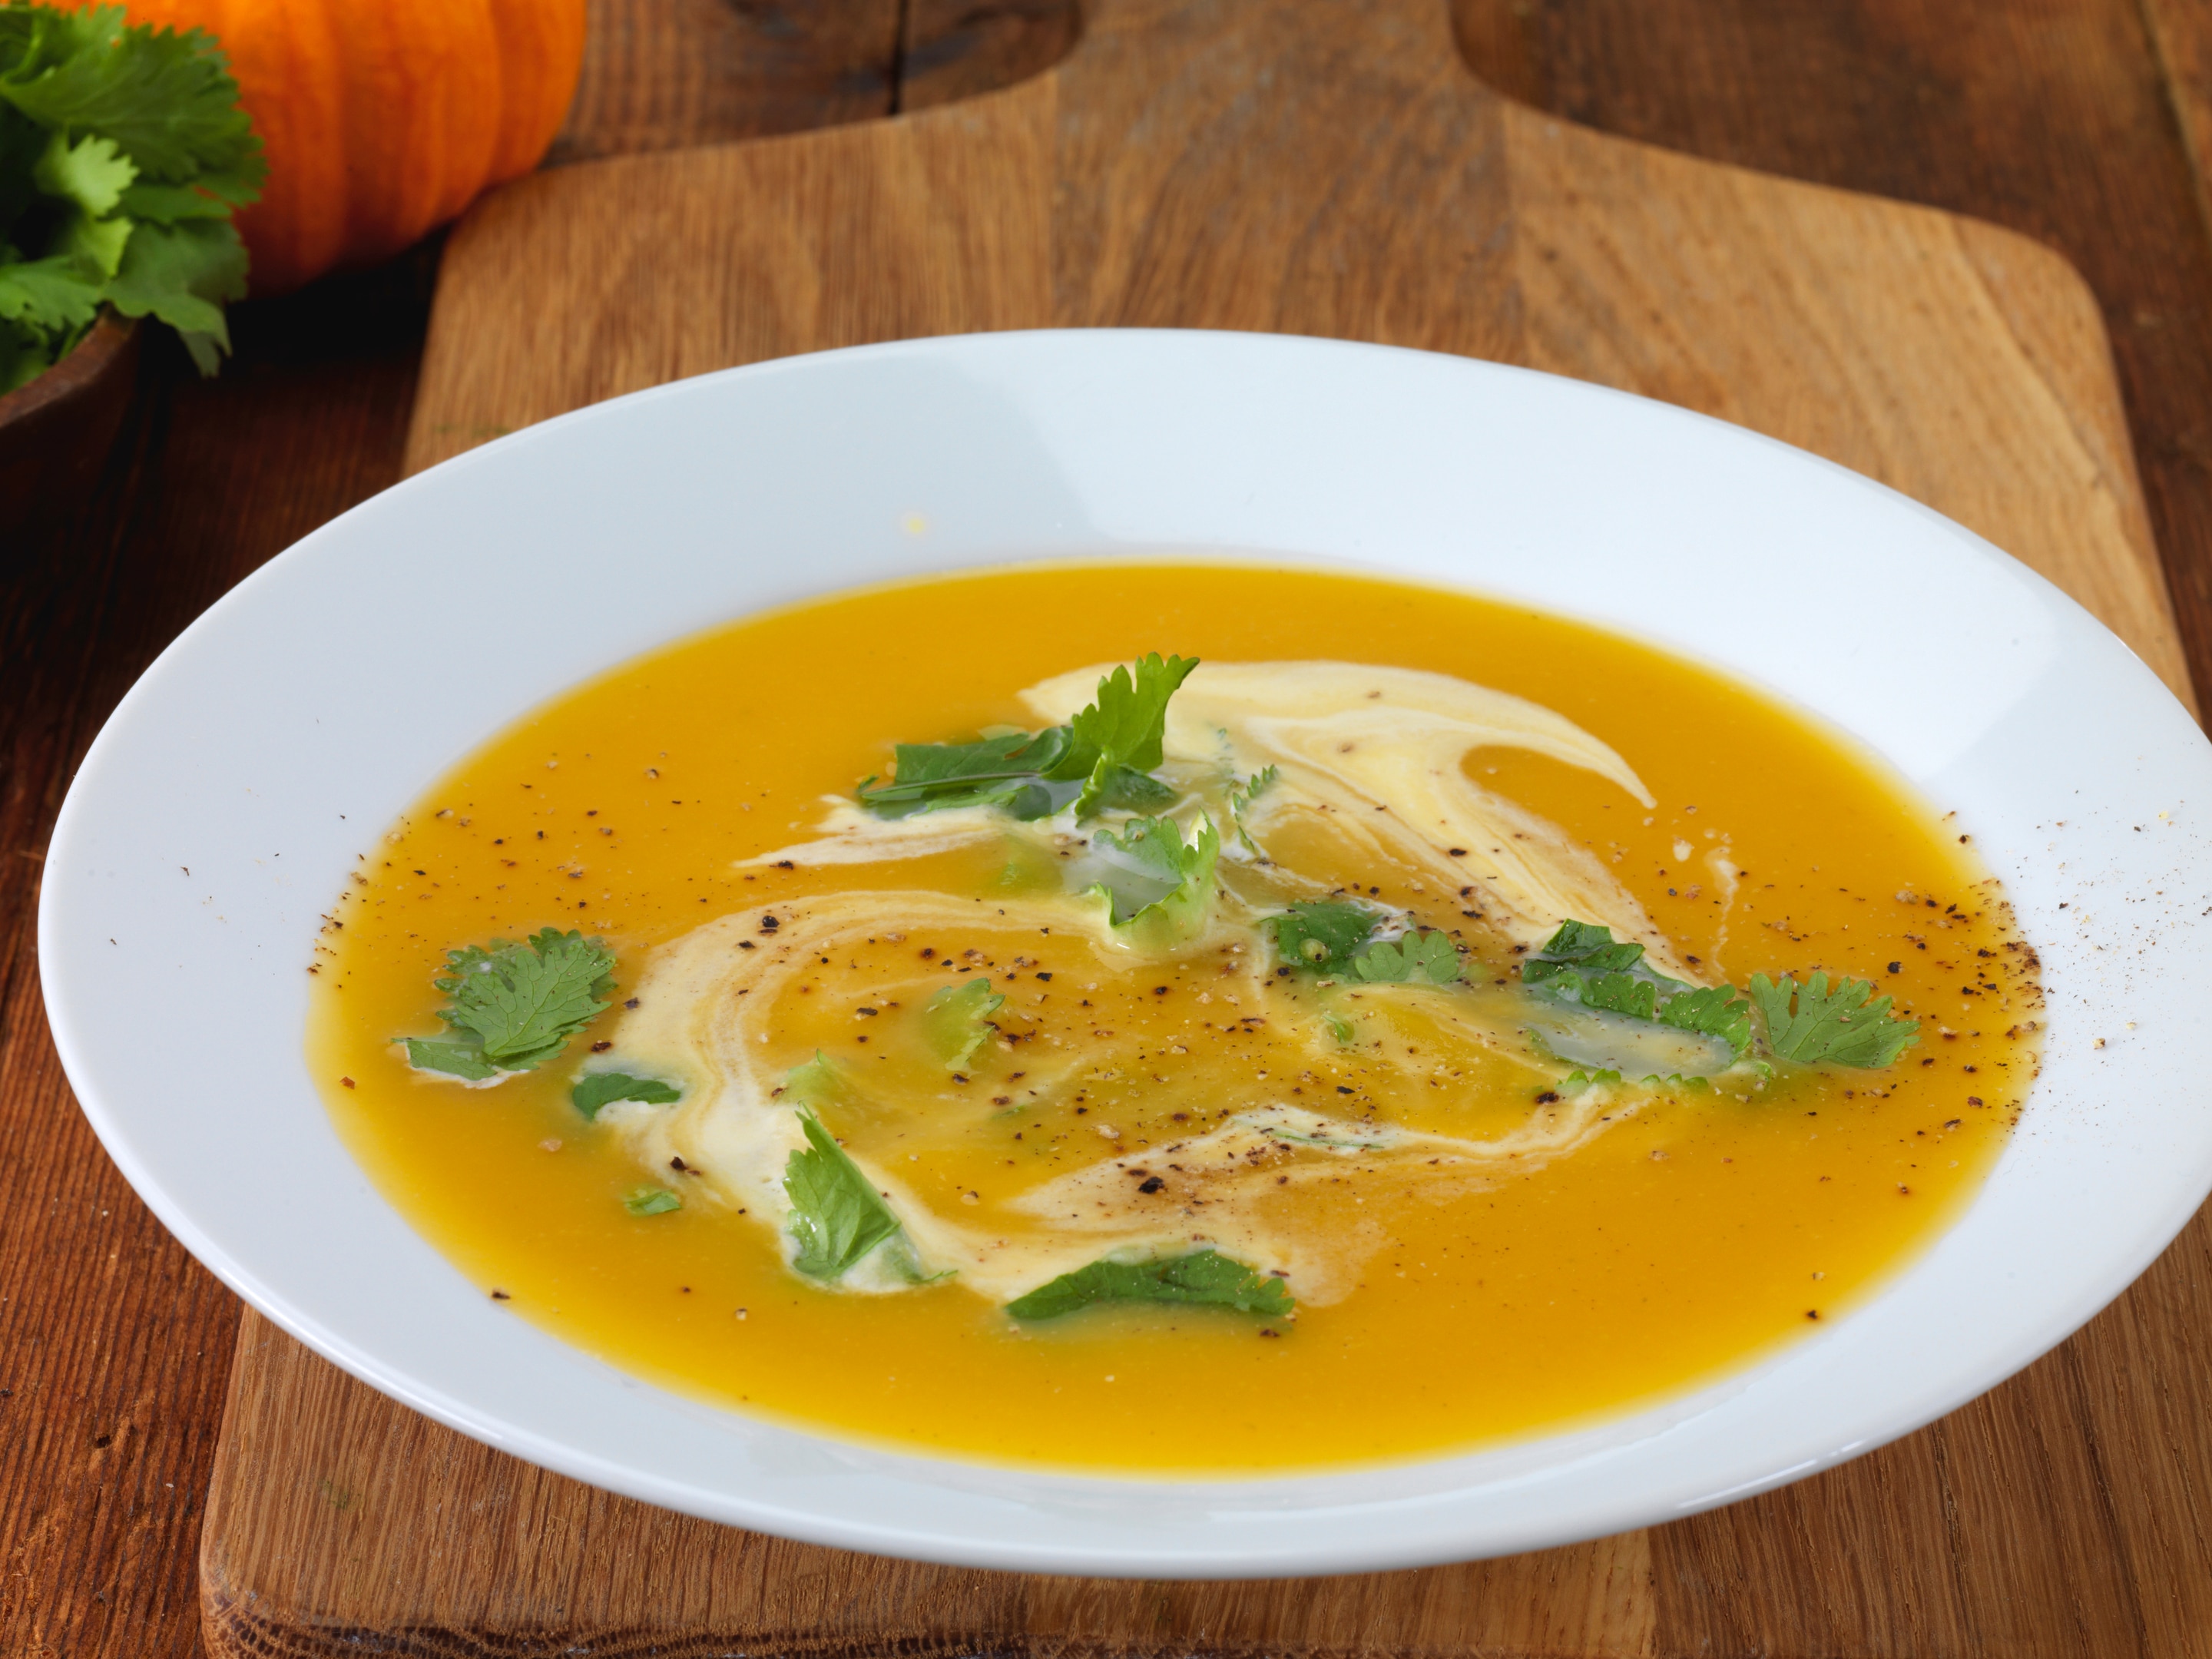 Fresh pumpkin soup with coriander and elmlea